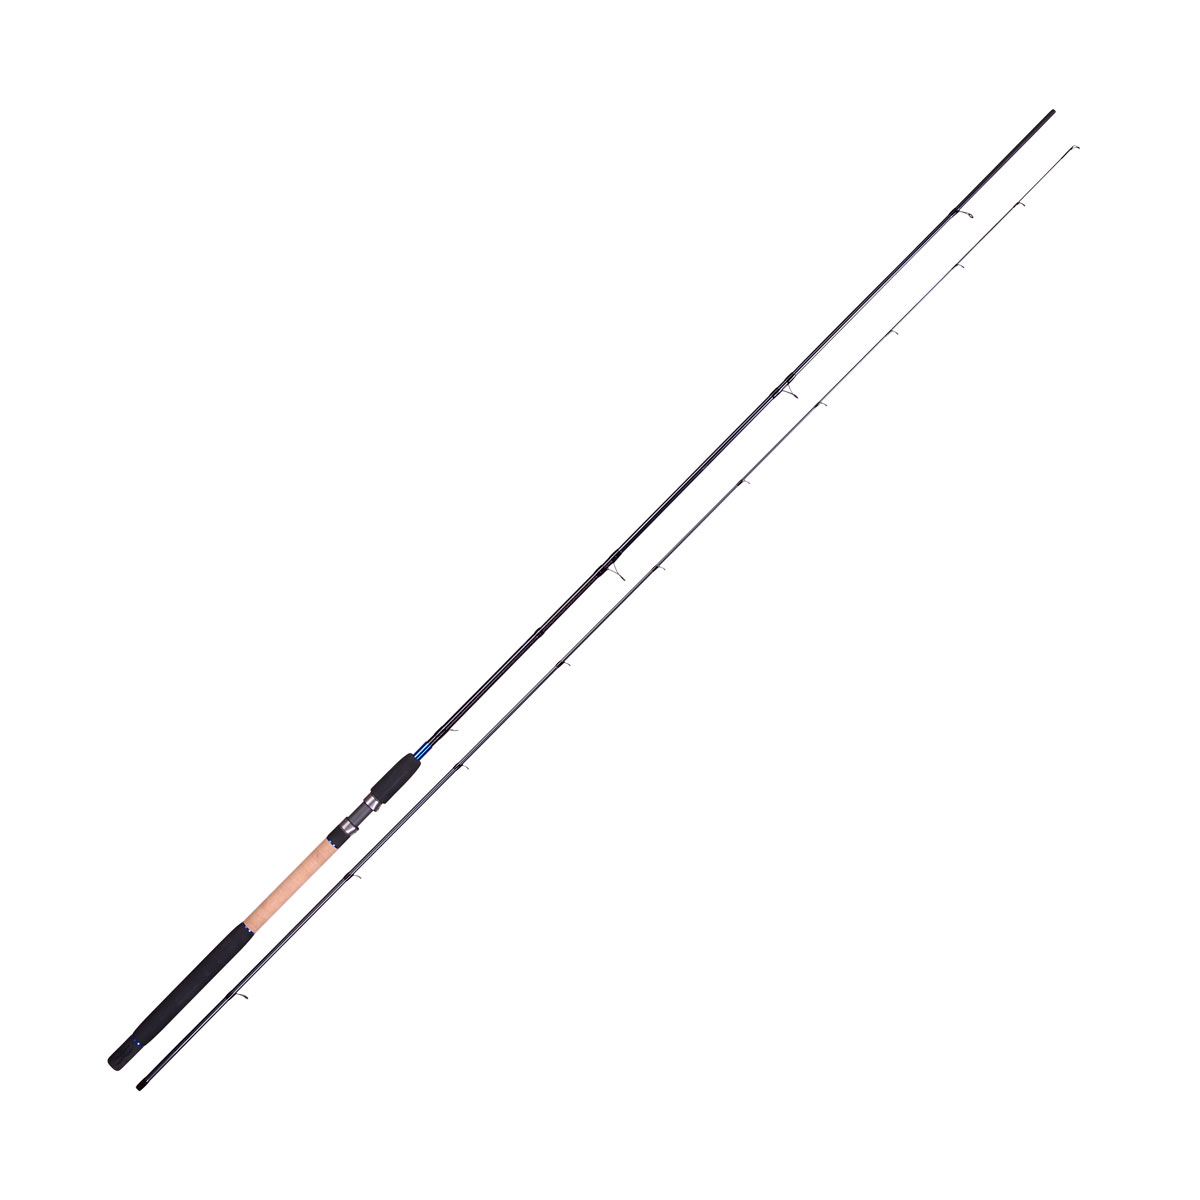 Cadence CR10 12ft Match Fishing Rods - Cadence Fishing